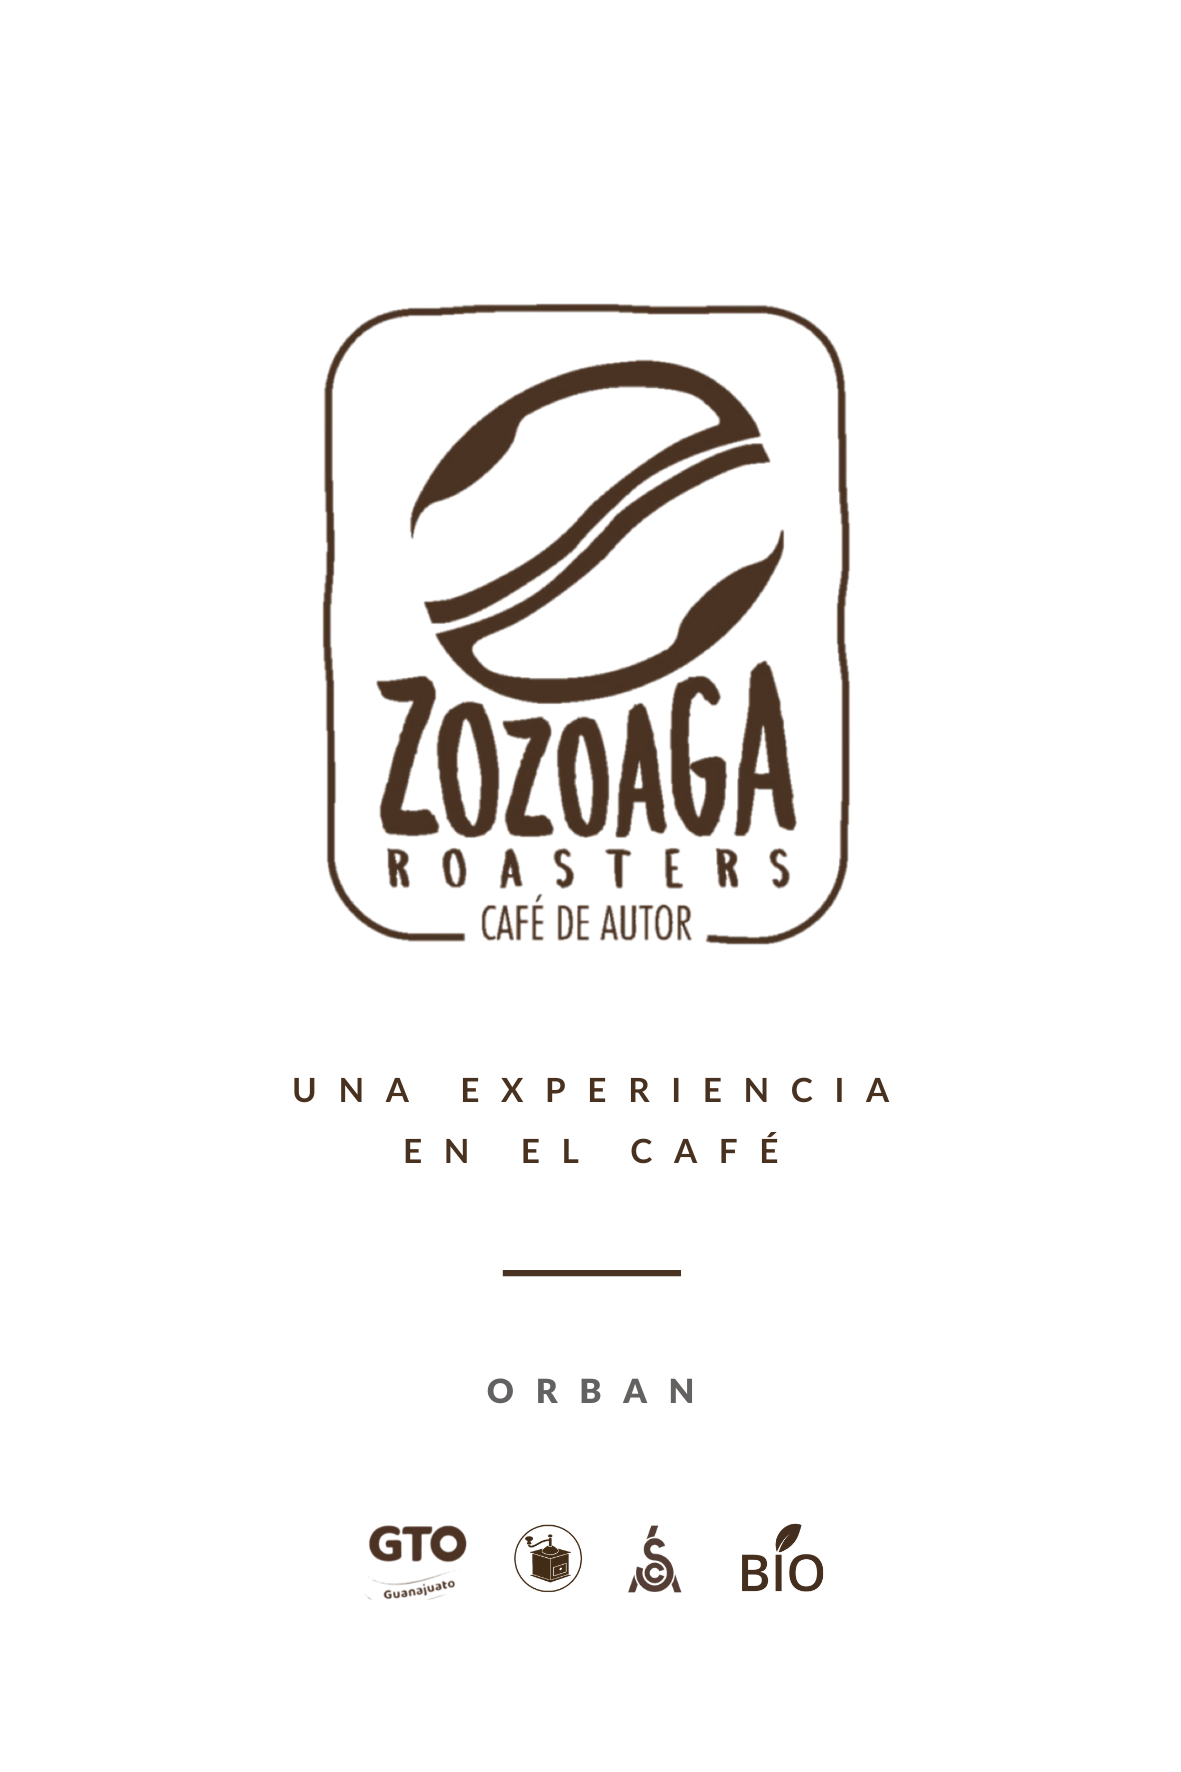 O R B A N - ZOZOAGA ROASTERS, CAFE DE AUTOR